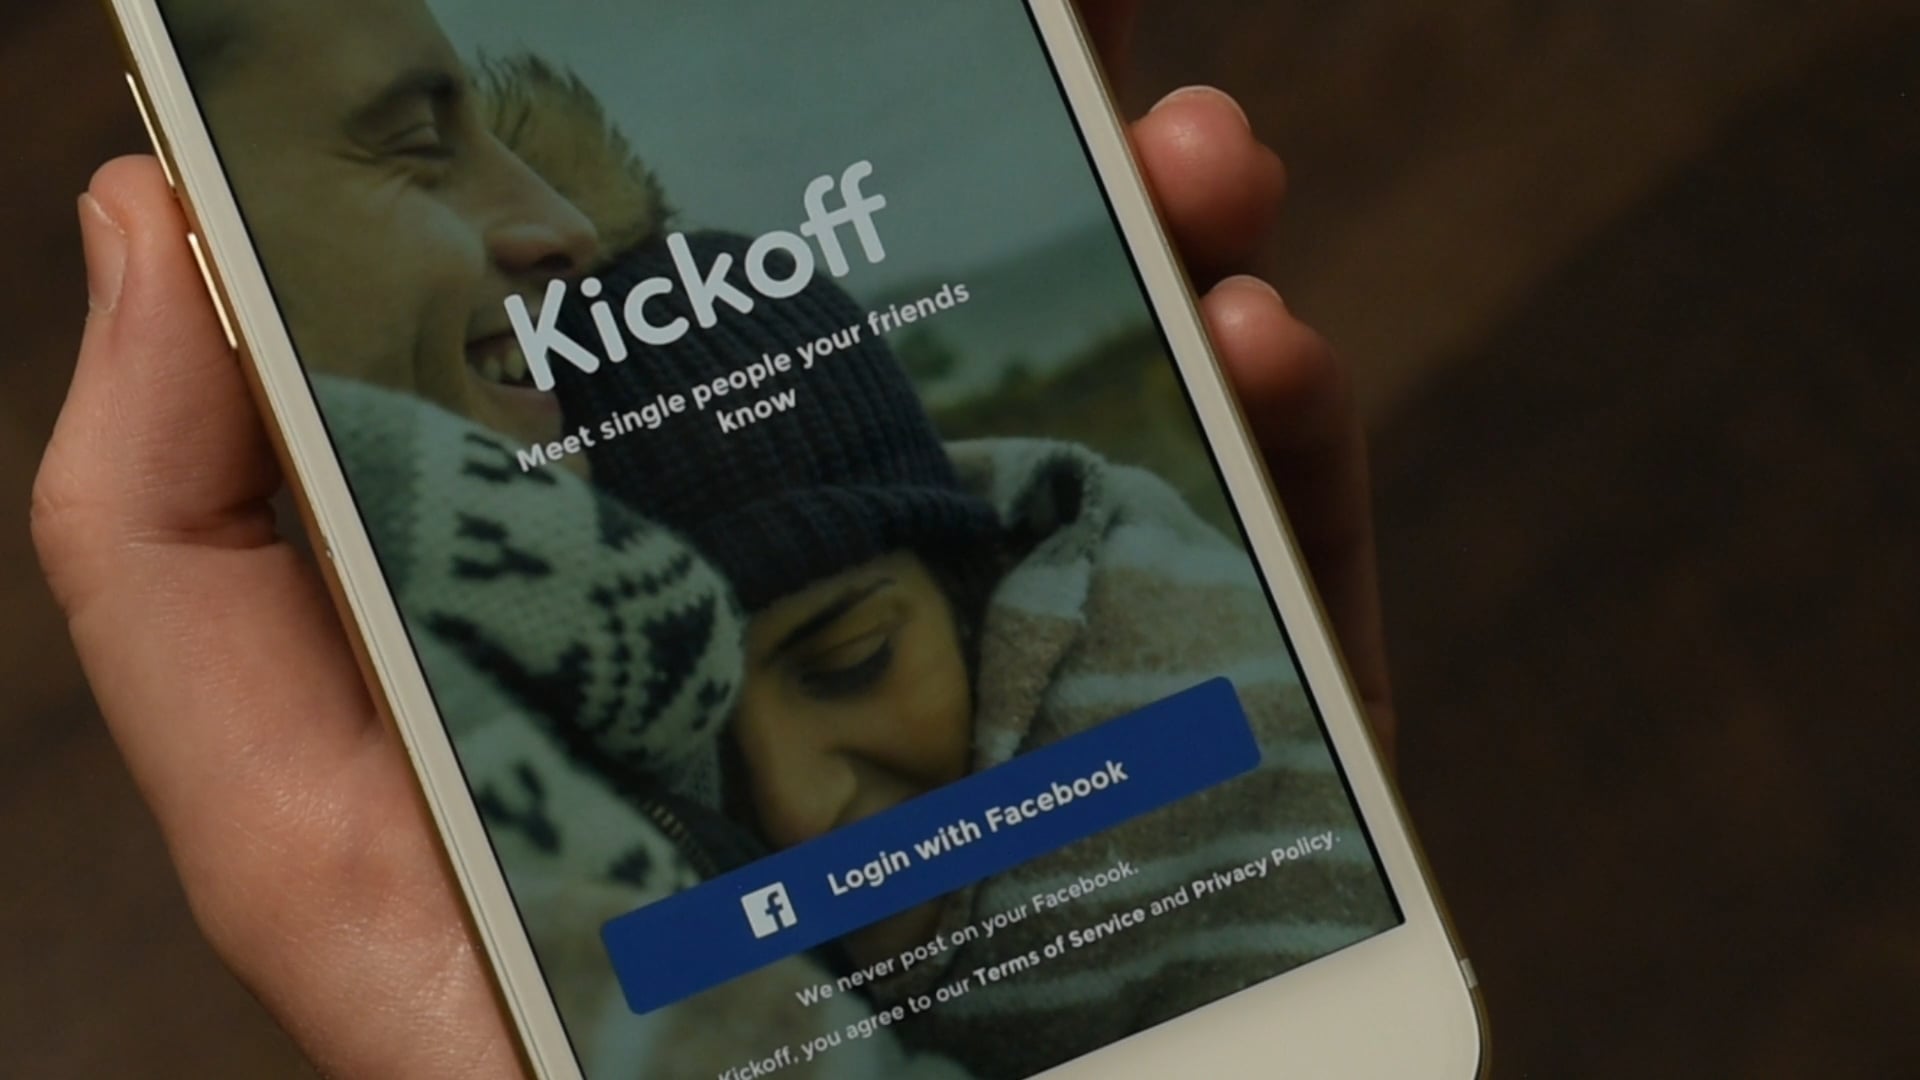 Kickoff App Commercial - "New IOS Tutorial"